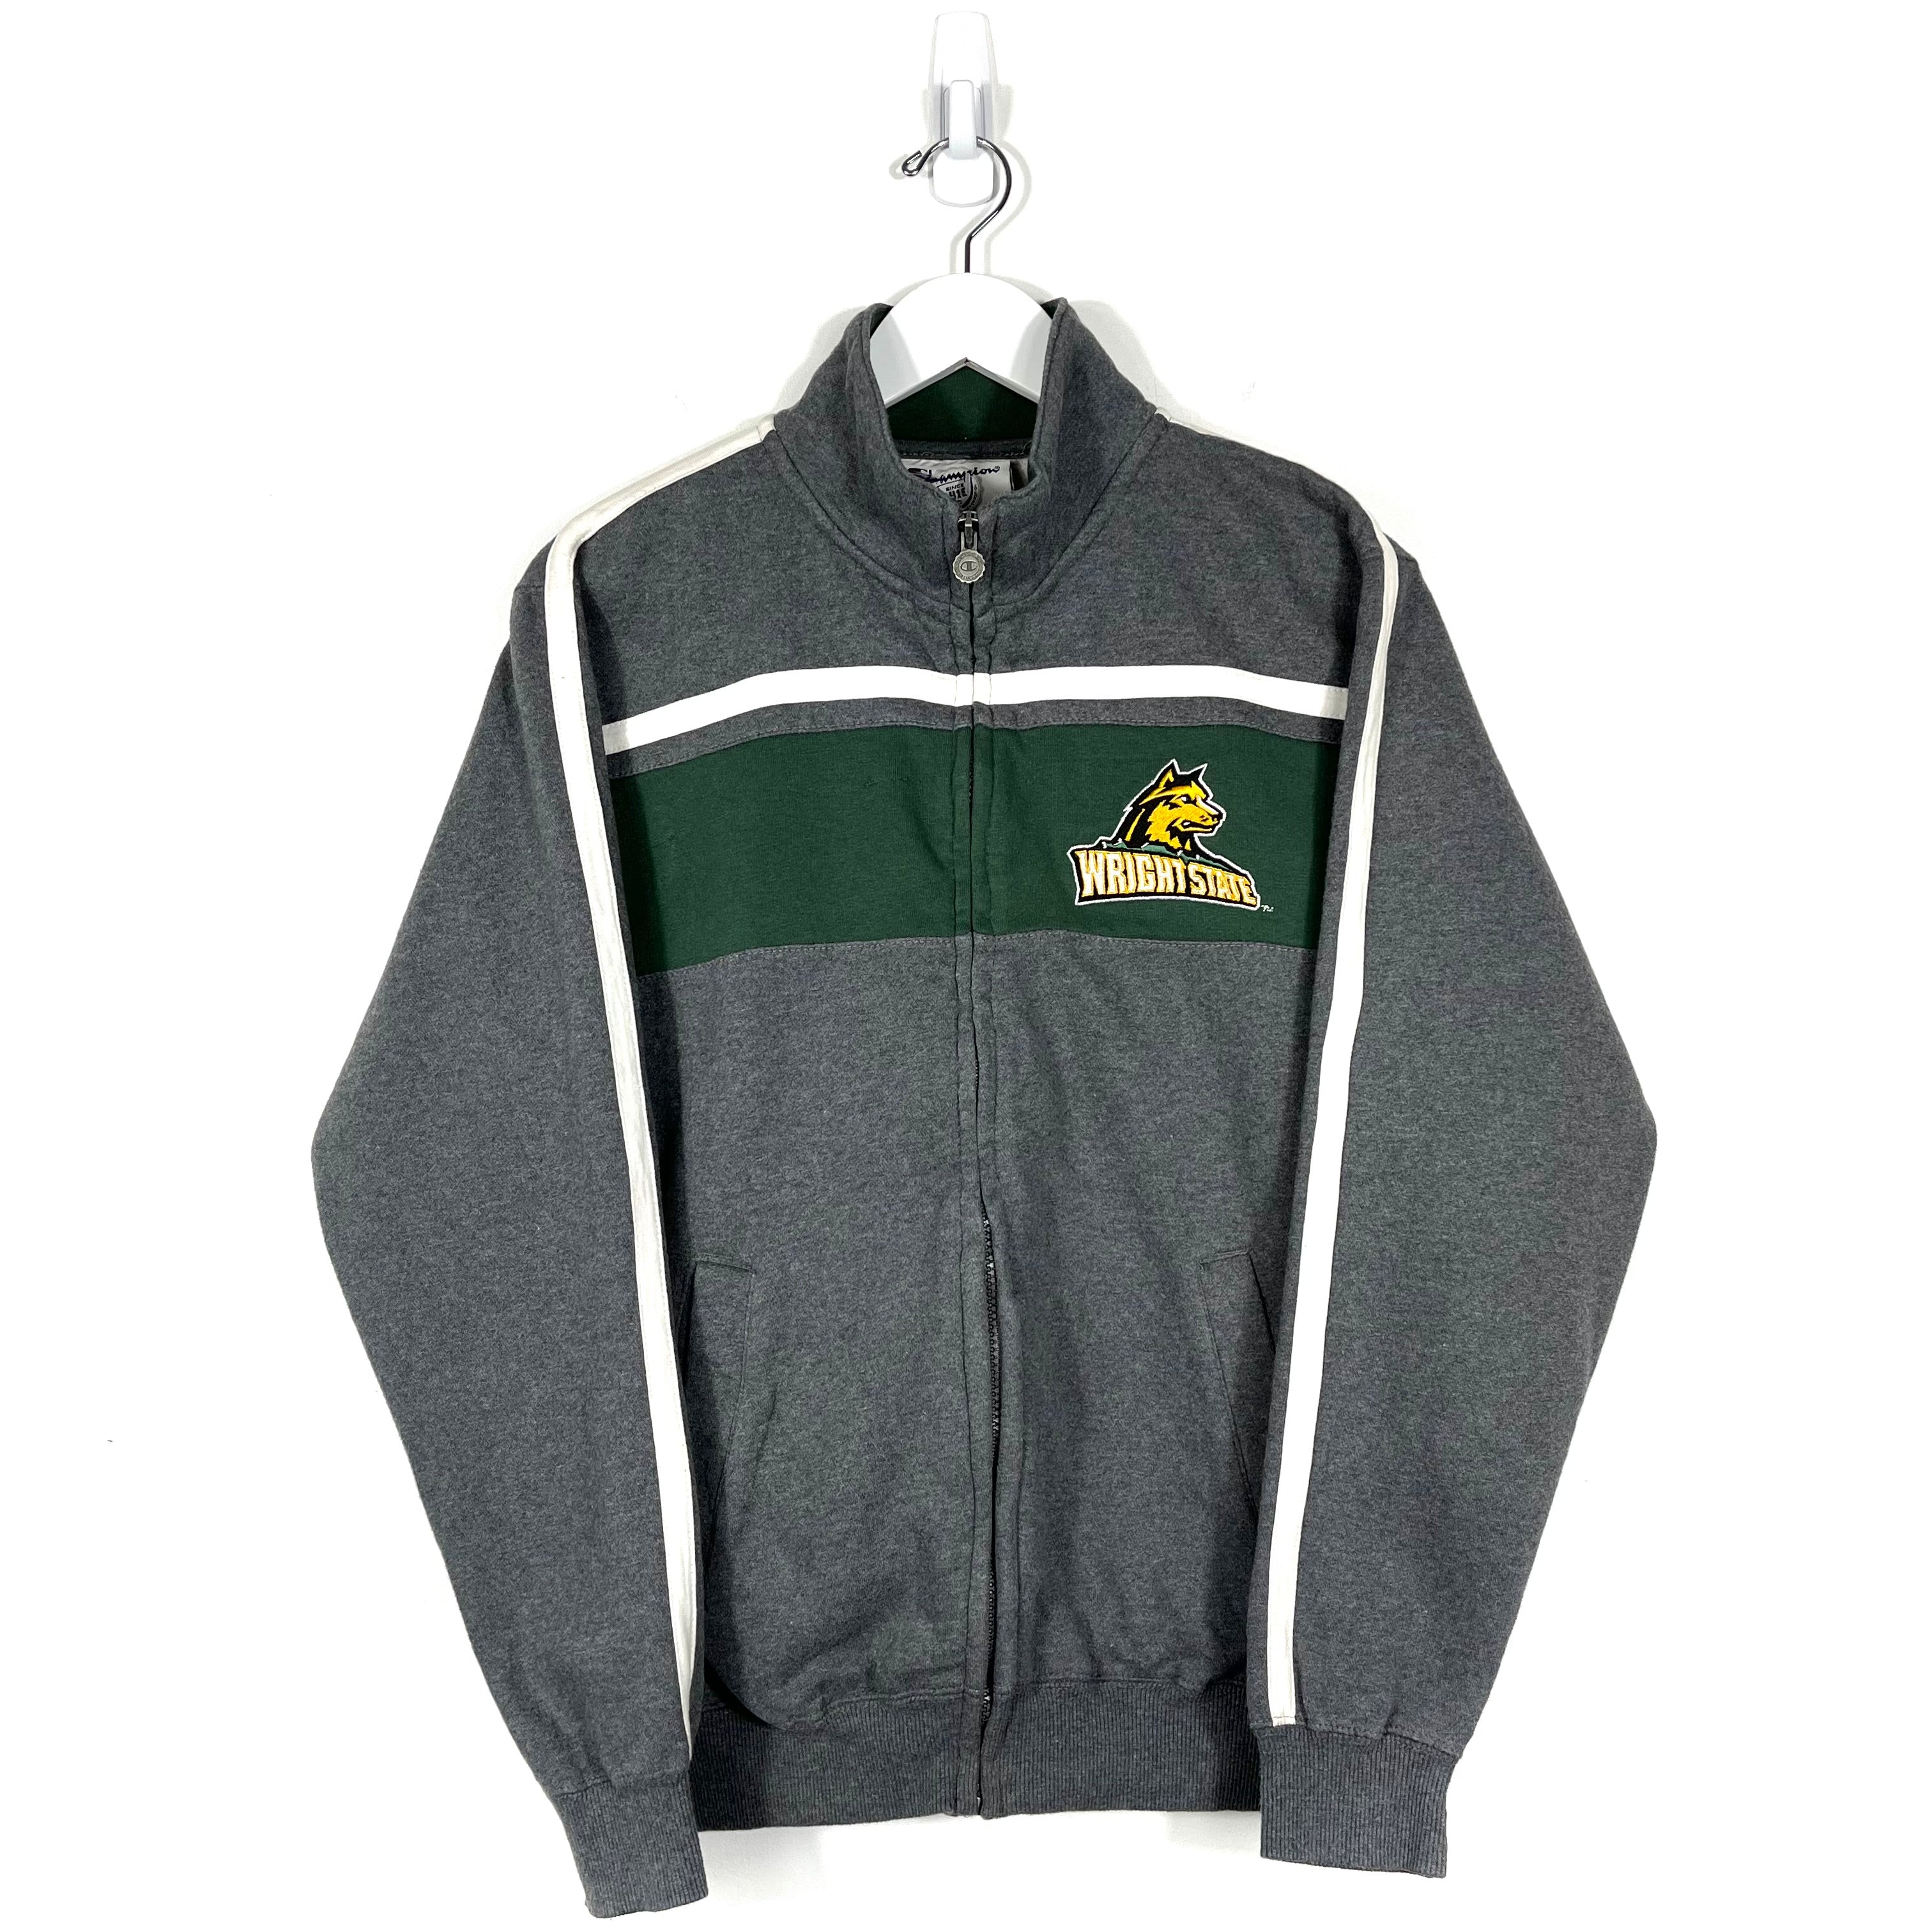 Vintage Champion Wright State Zip Up Sweatshirt - Men's Small